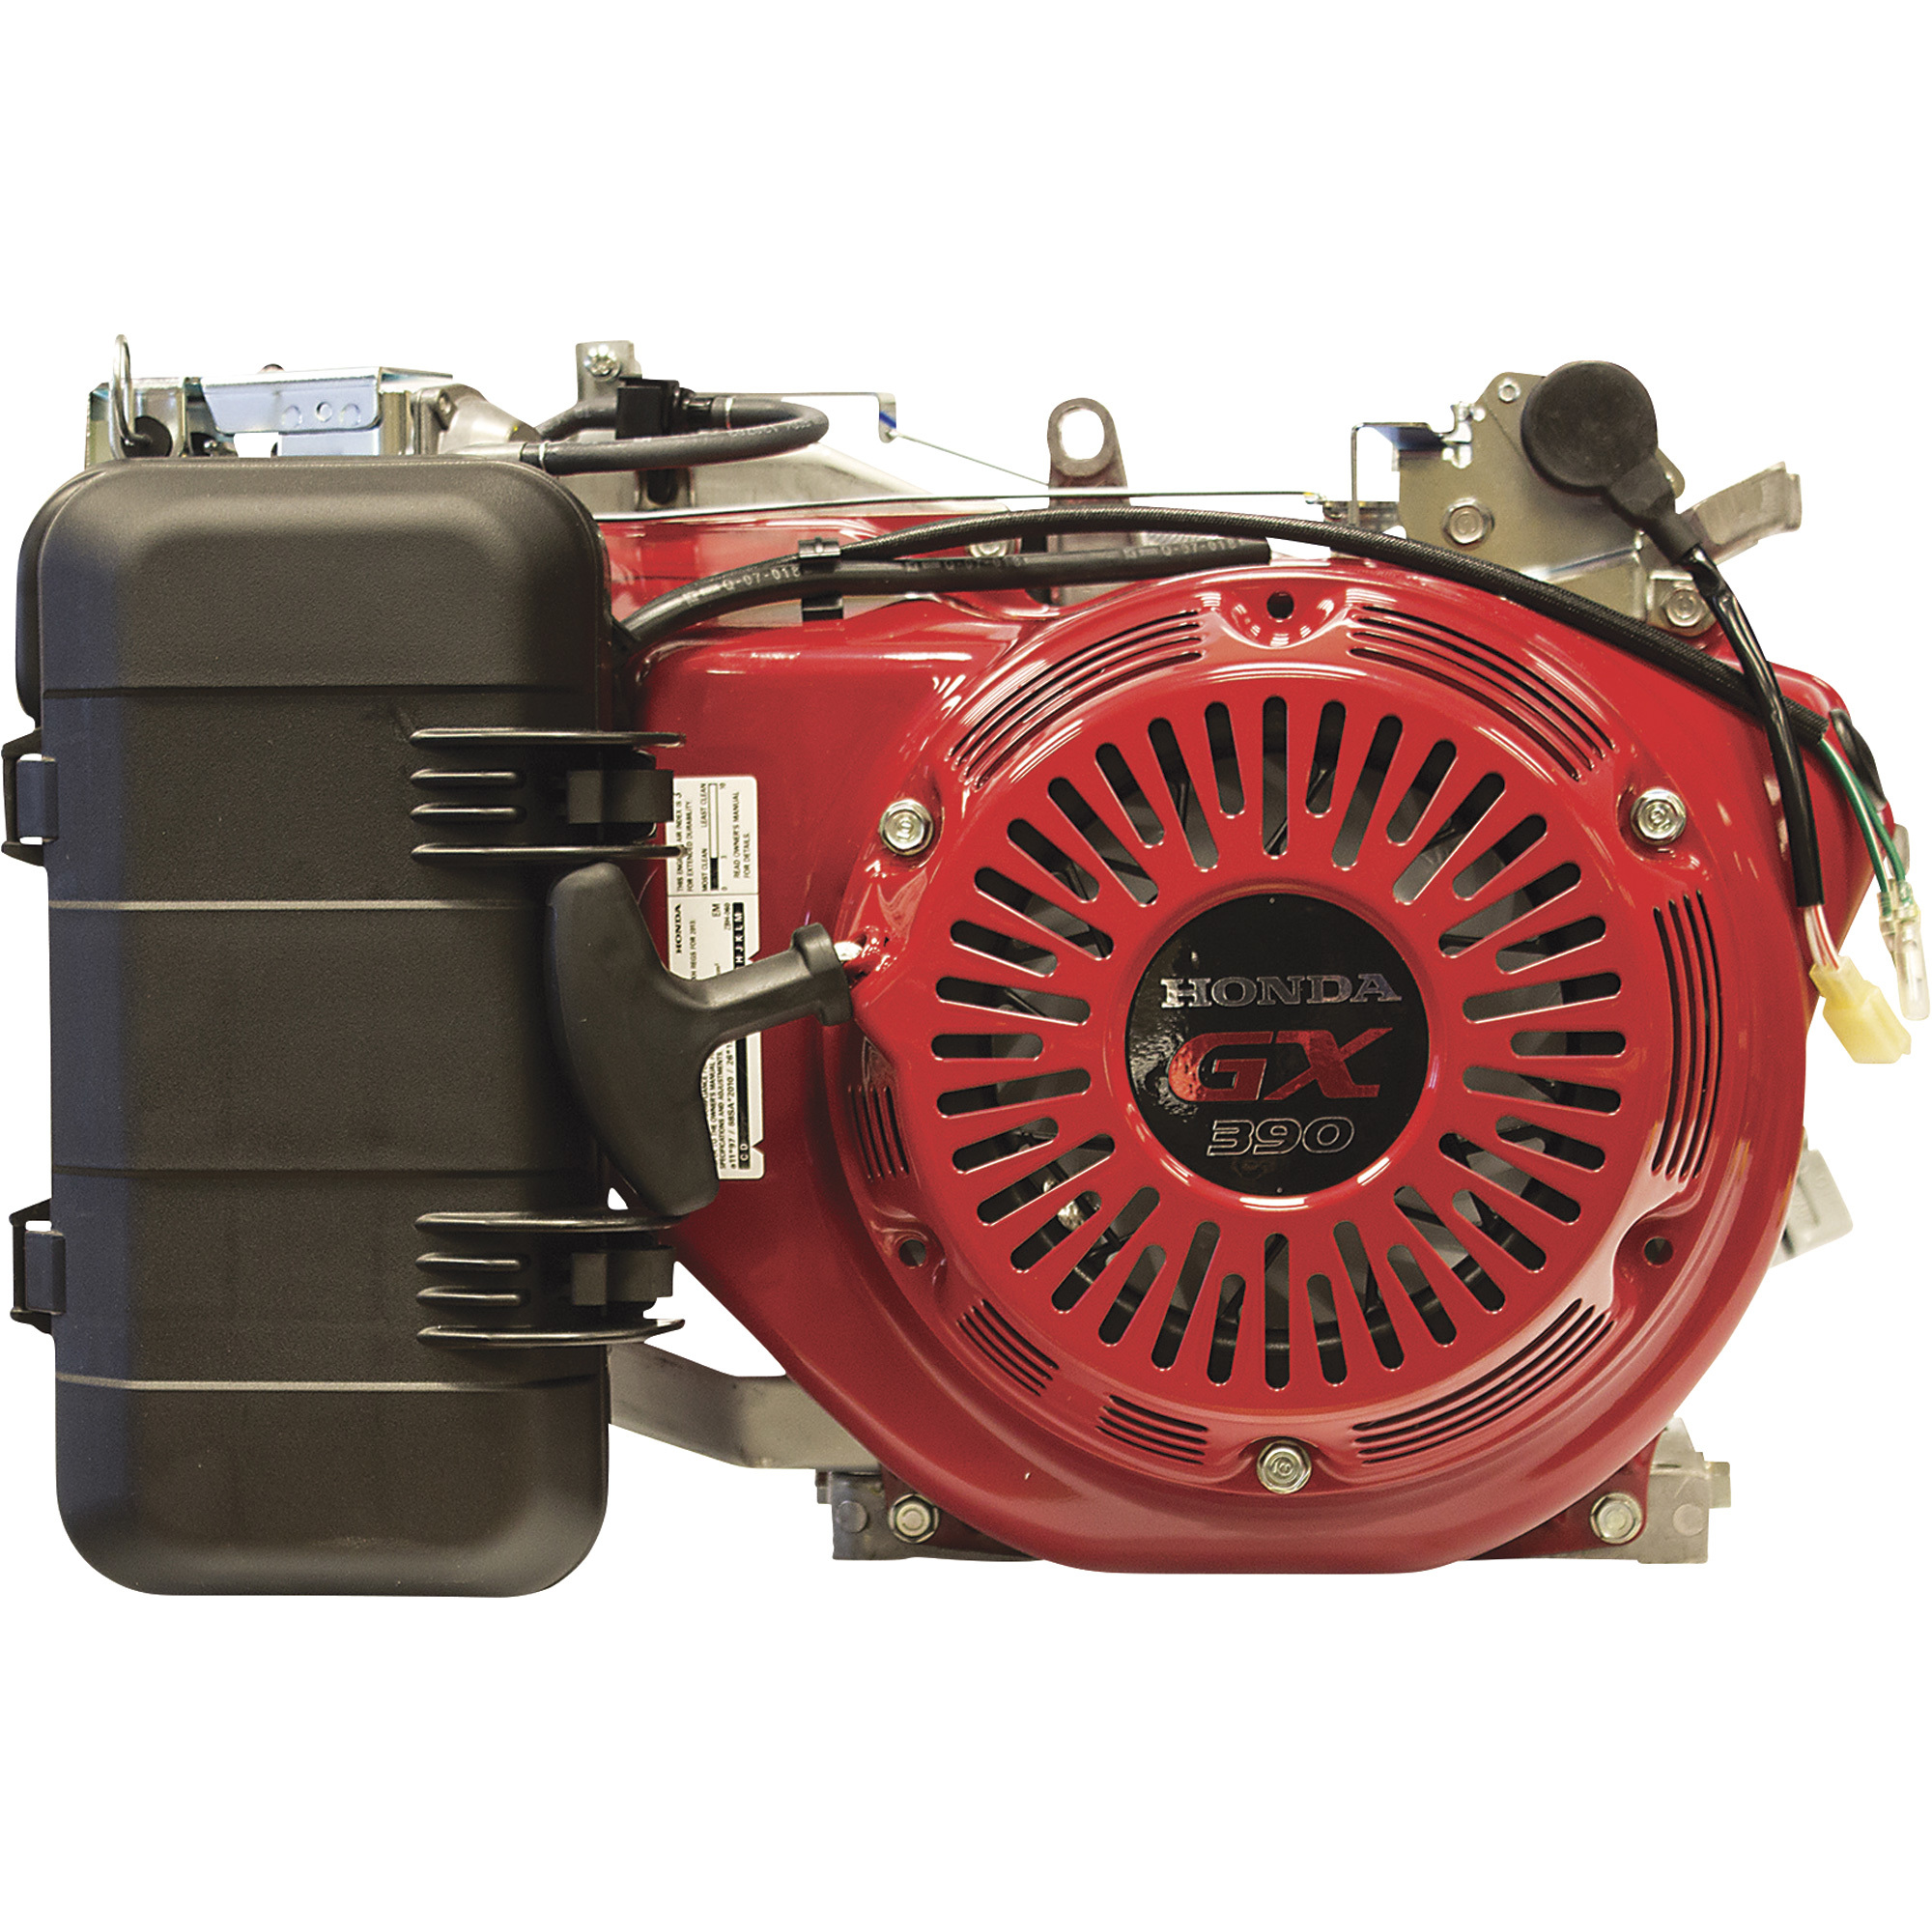 Honda Horizontal OHV Engine for Generators, 389cc, GX Series, Model GX390RT2VWC